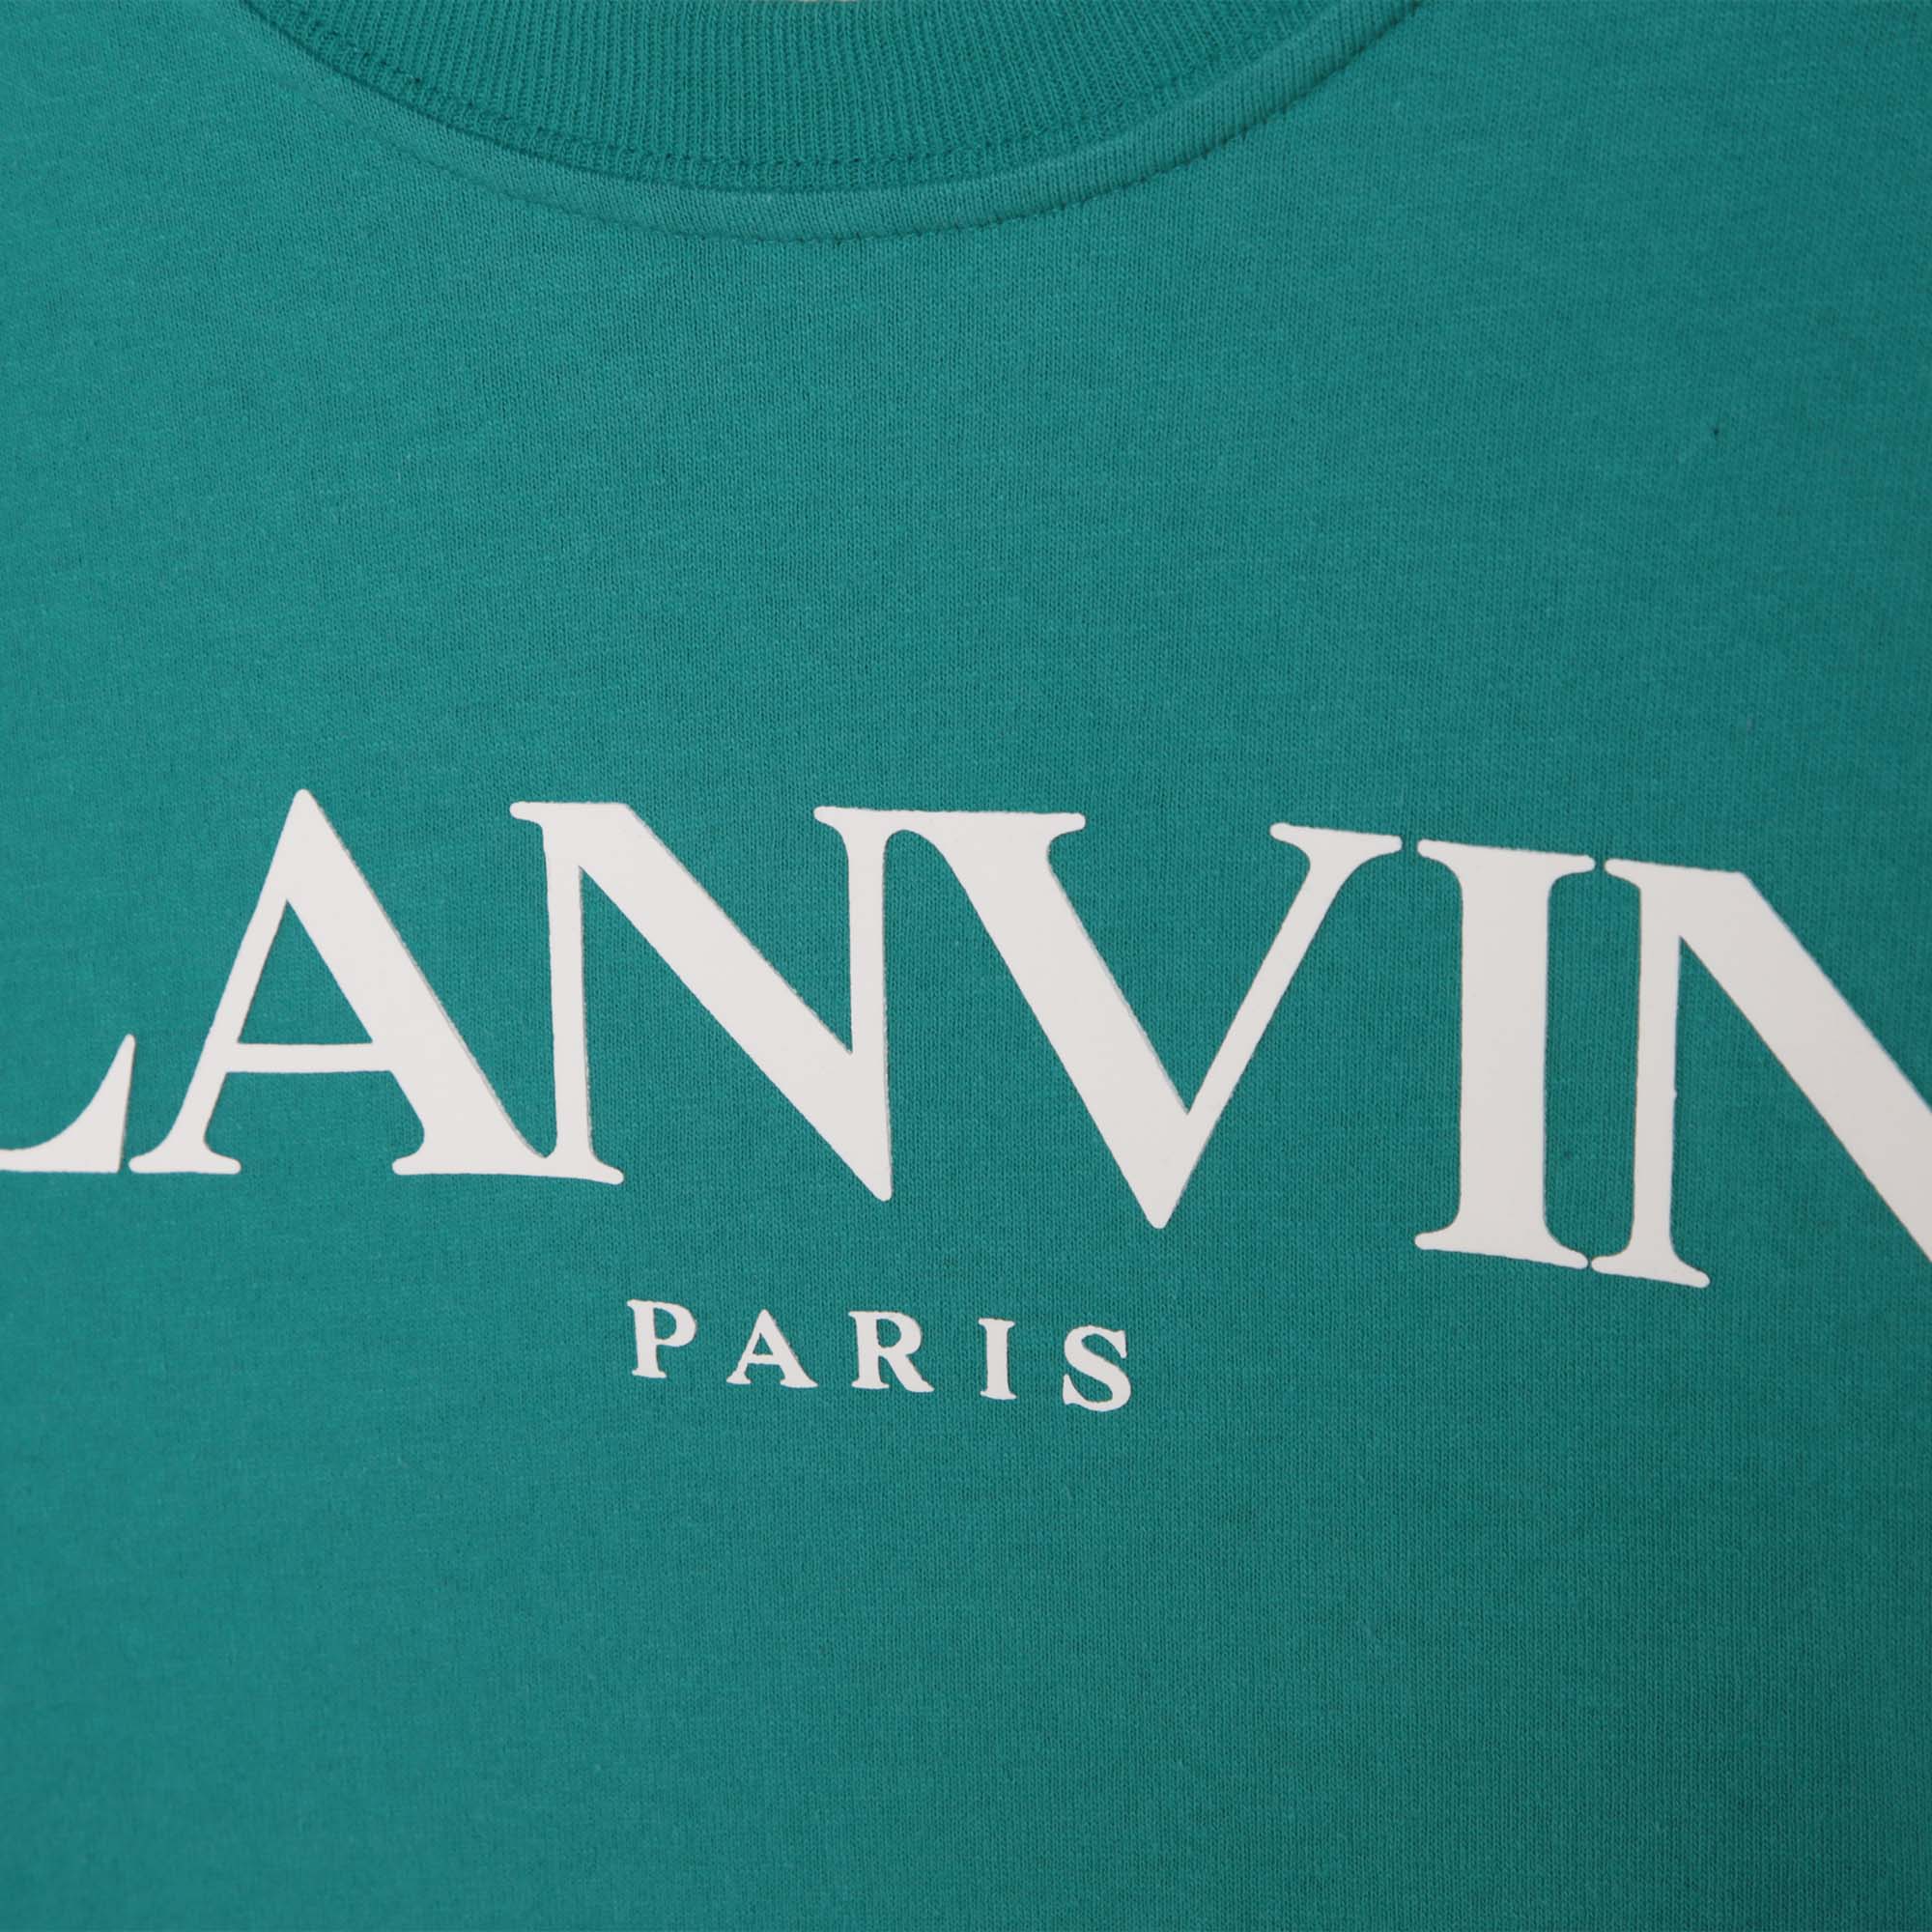 Short-sleeved cotton T-shirt LANVIN for BOY